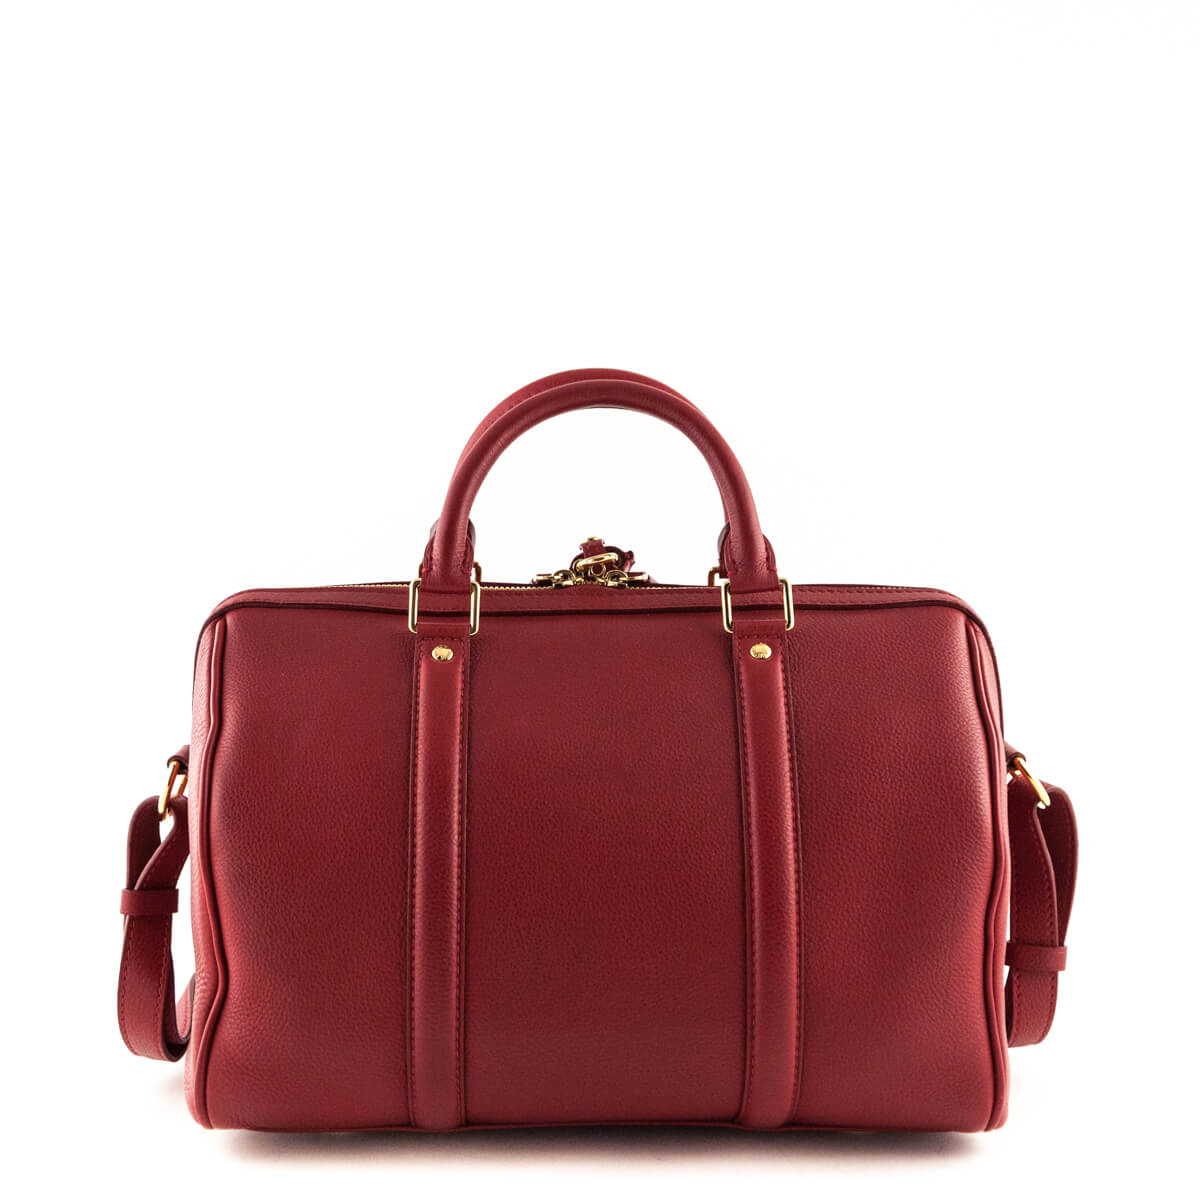 Louis Vuitton Sofia Coppola Red Leather Handbag (Pre-Owned)